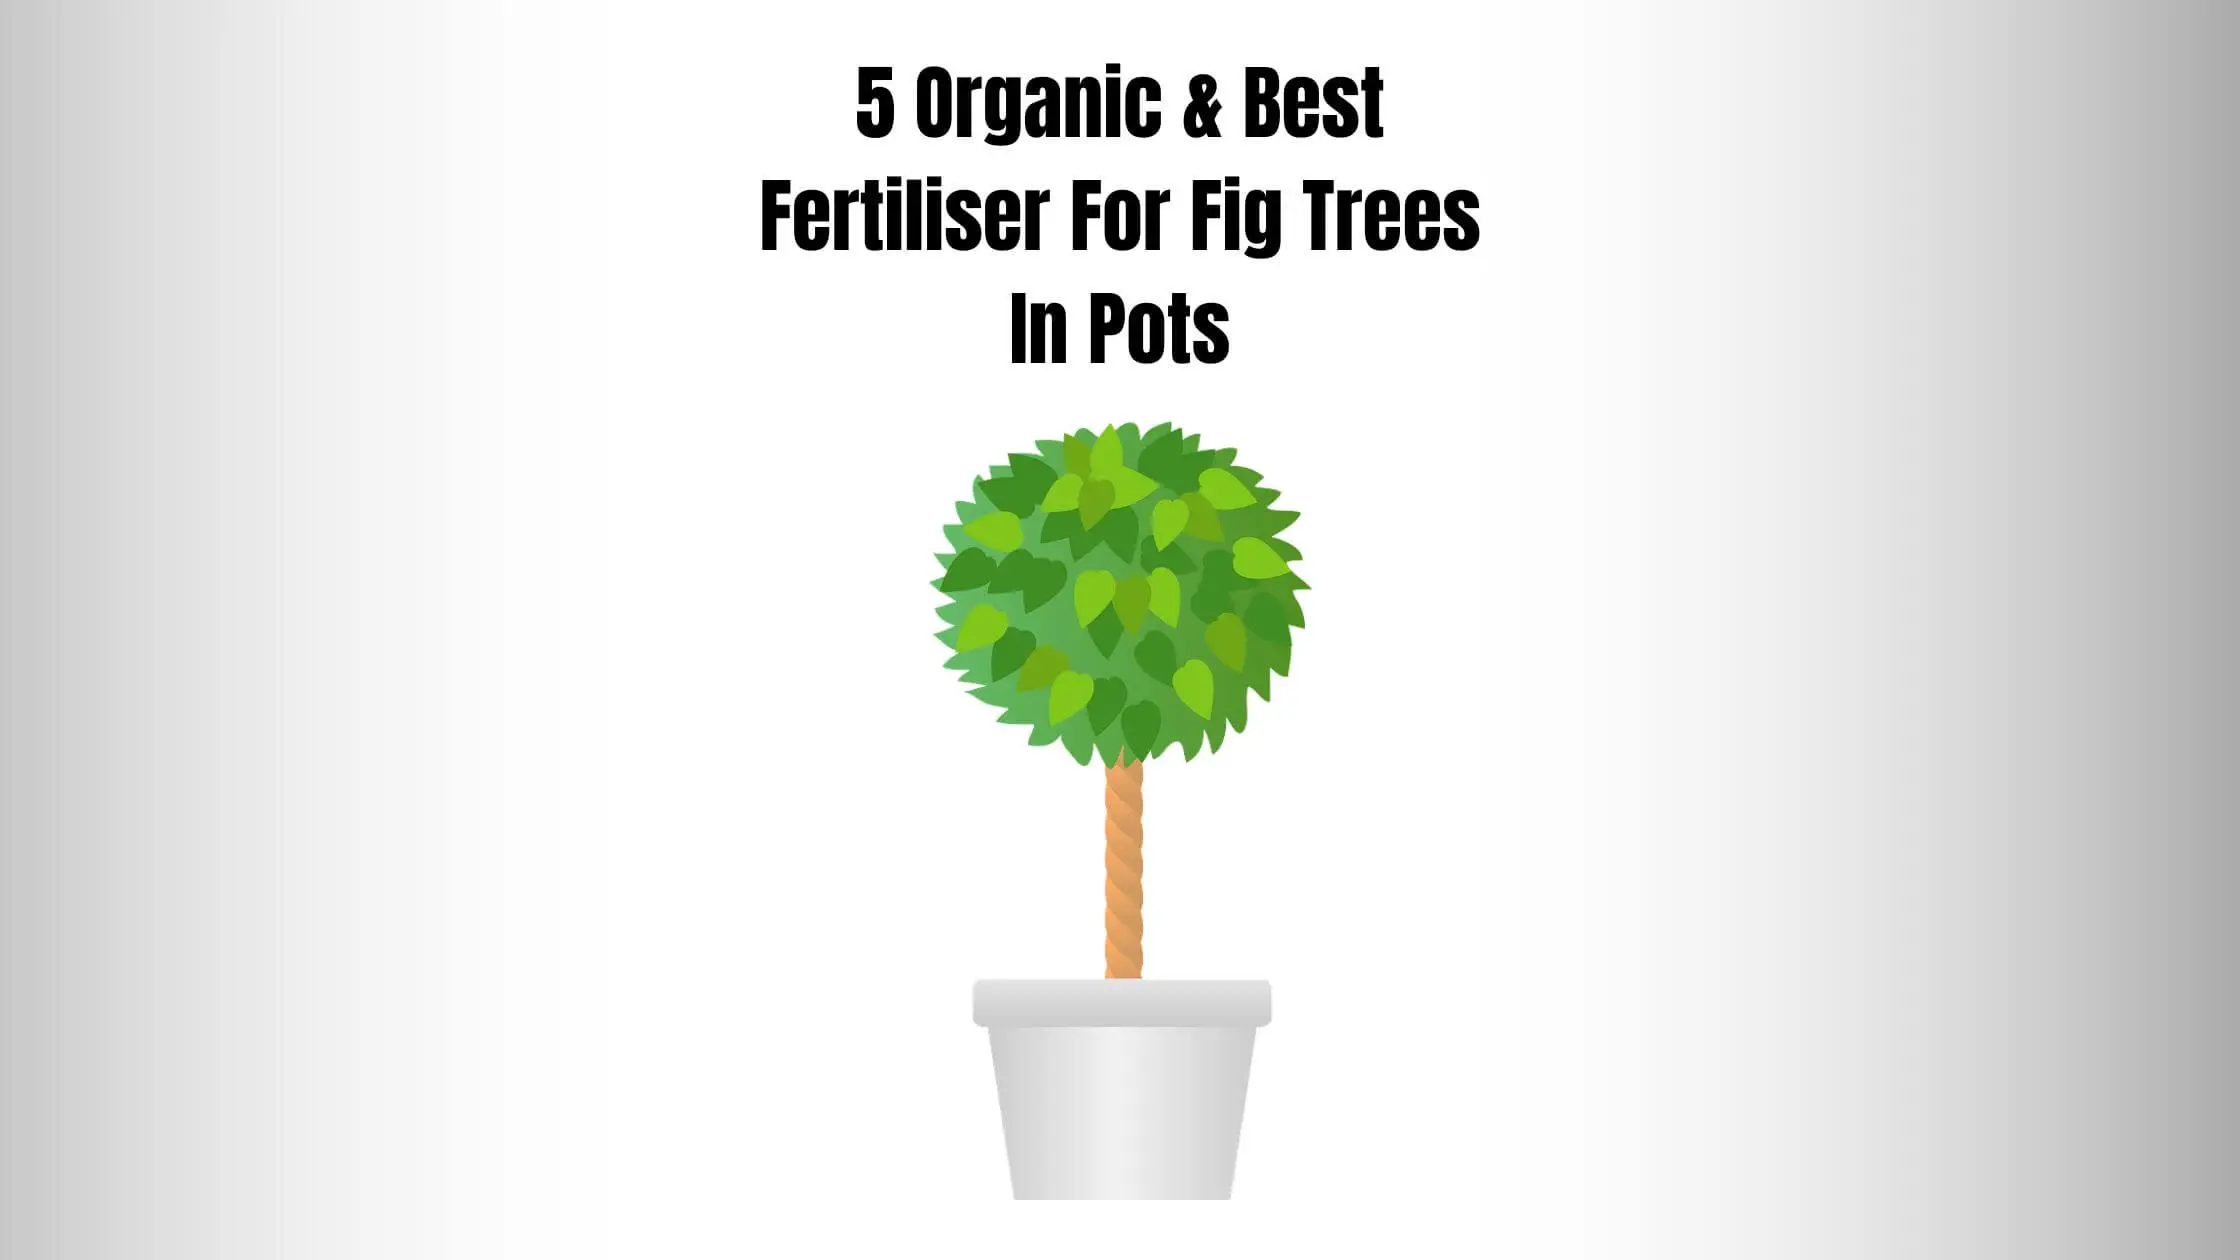 5 ORGANIC & BEST FERTILISER FOR FIG TREES IN POTS